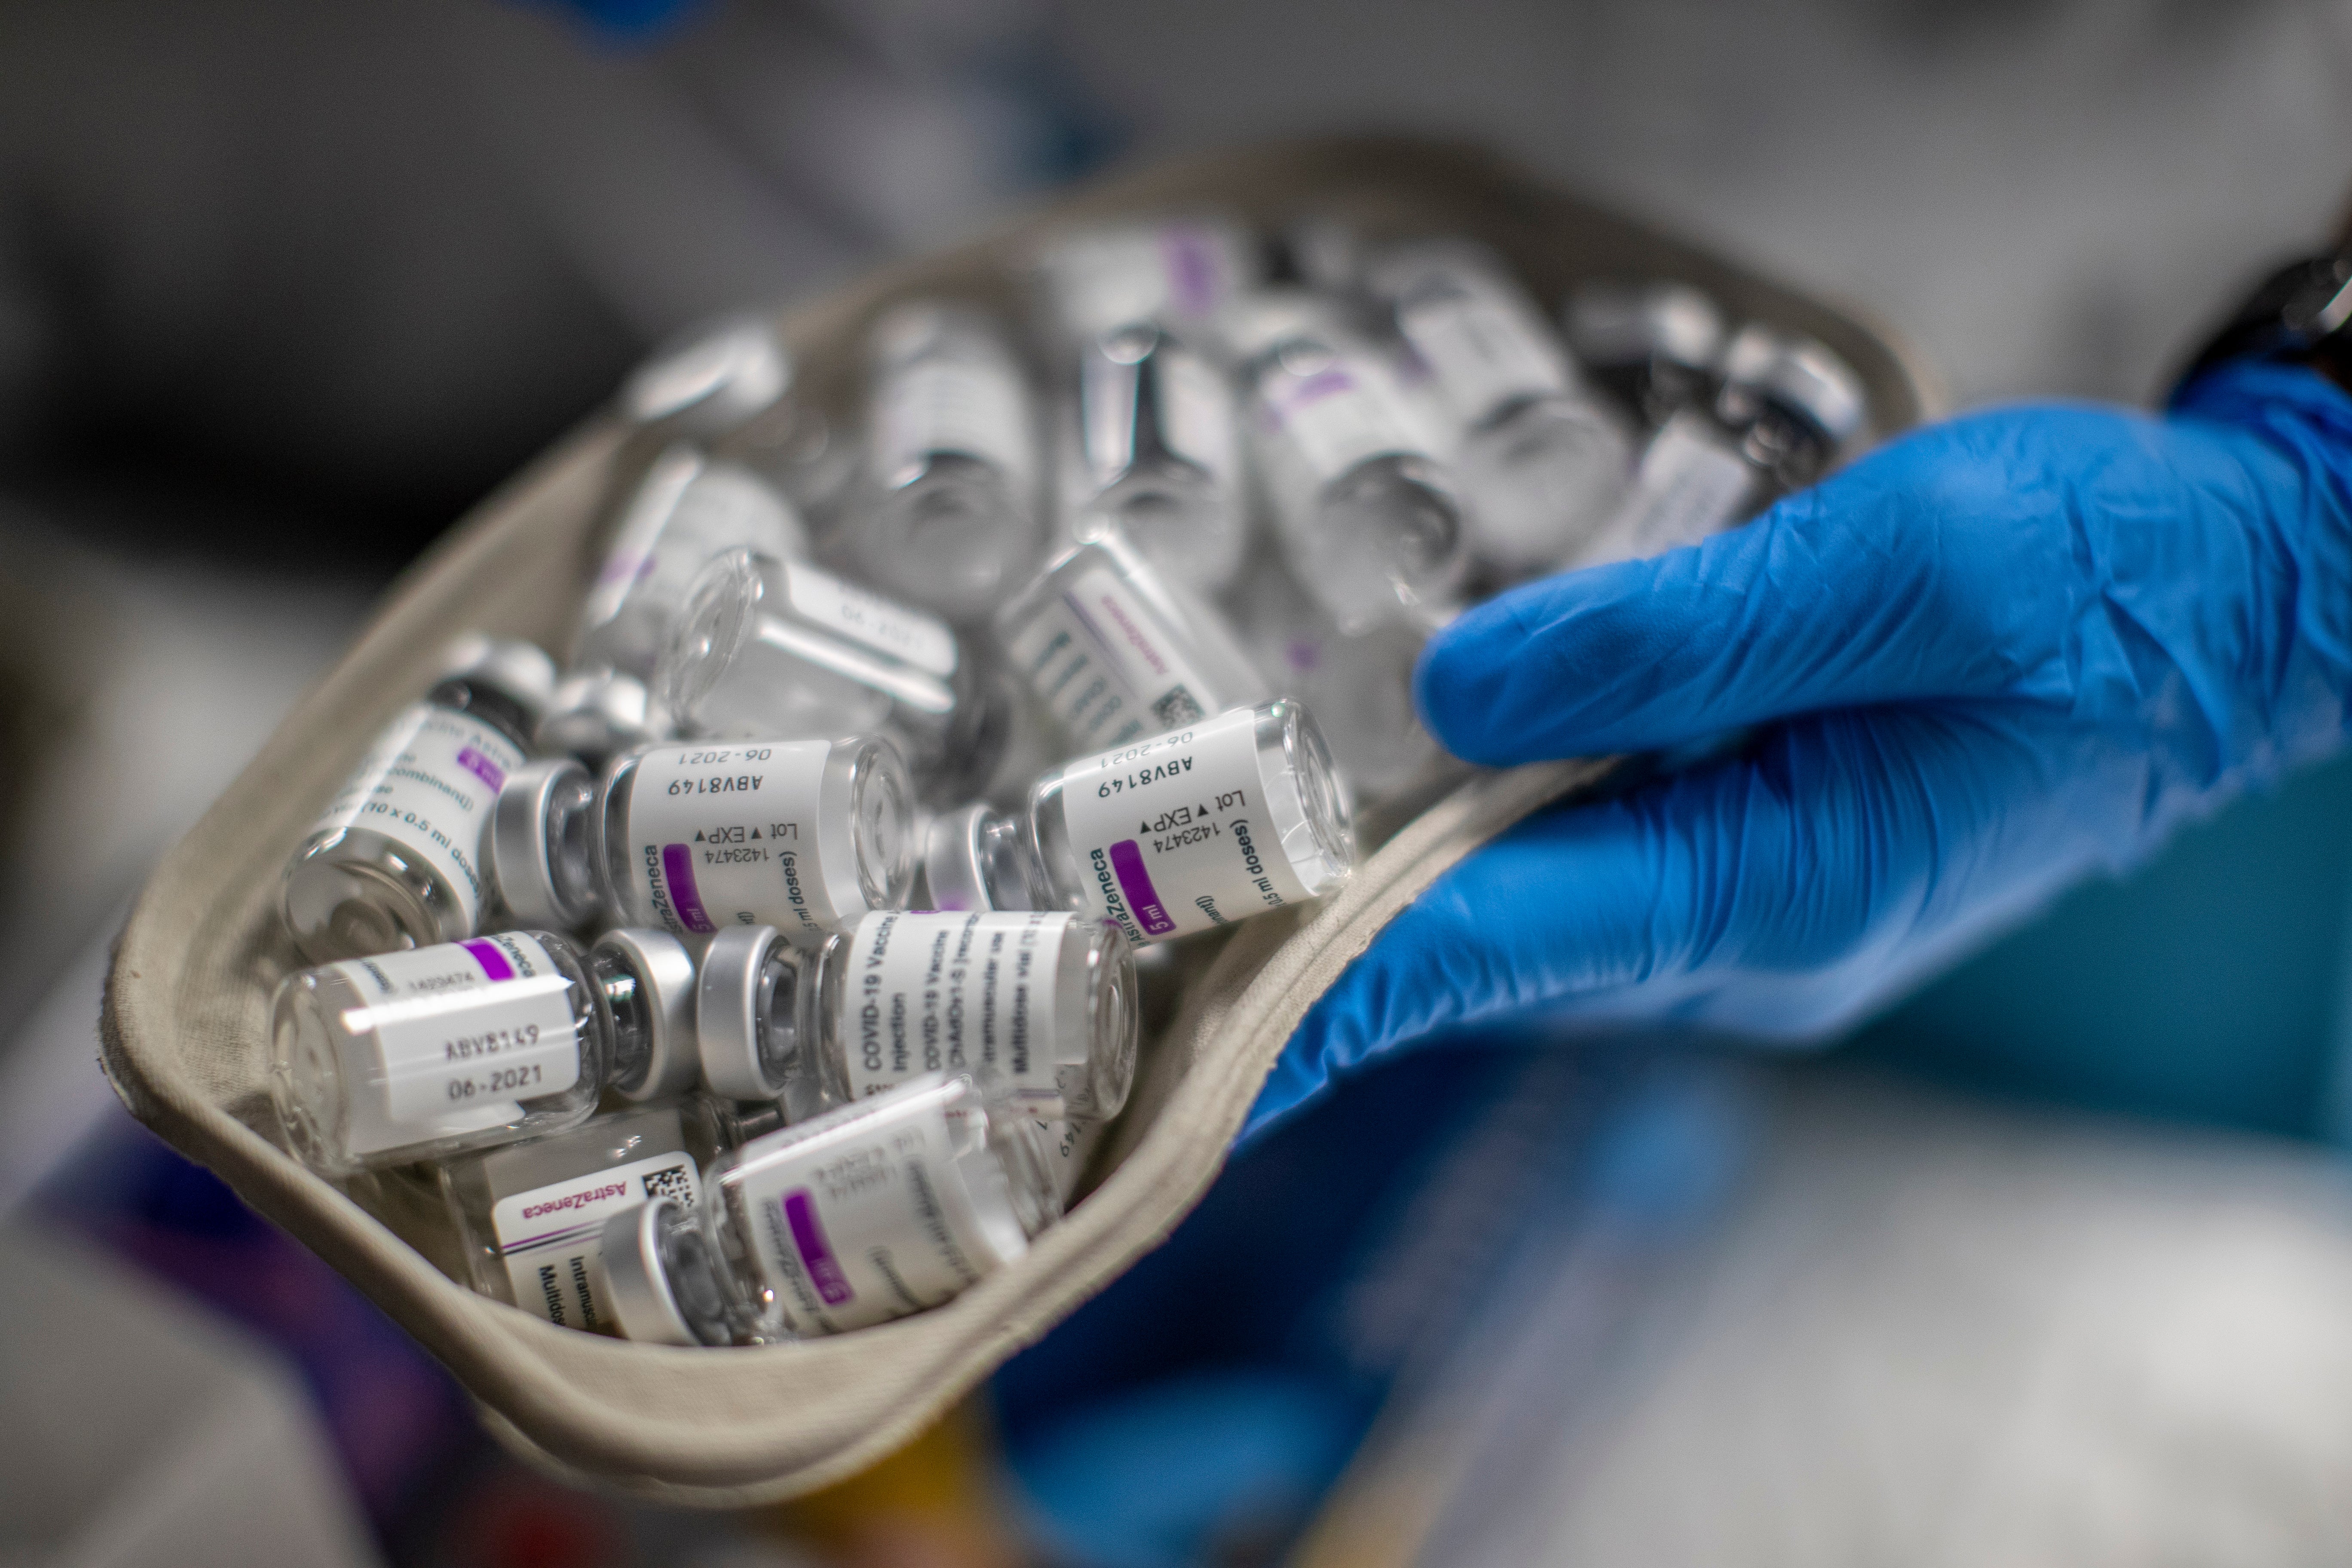 AstraZeneca has withdrawn its Covid-19 vaccine